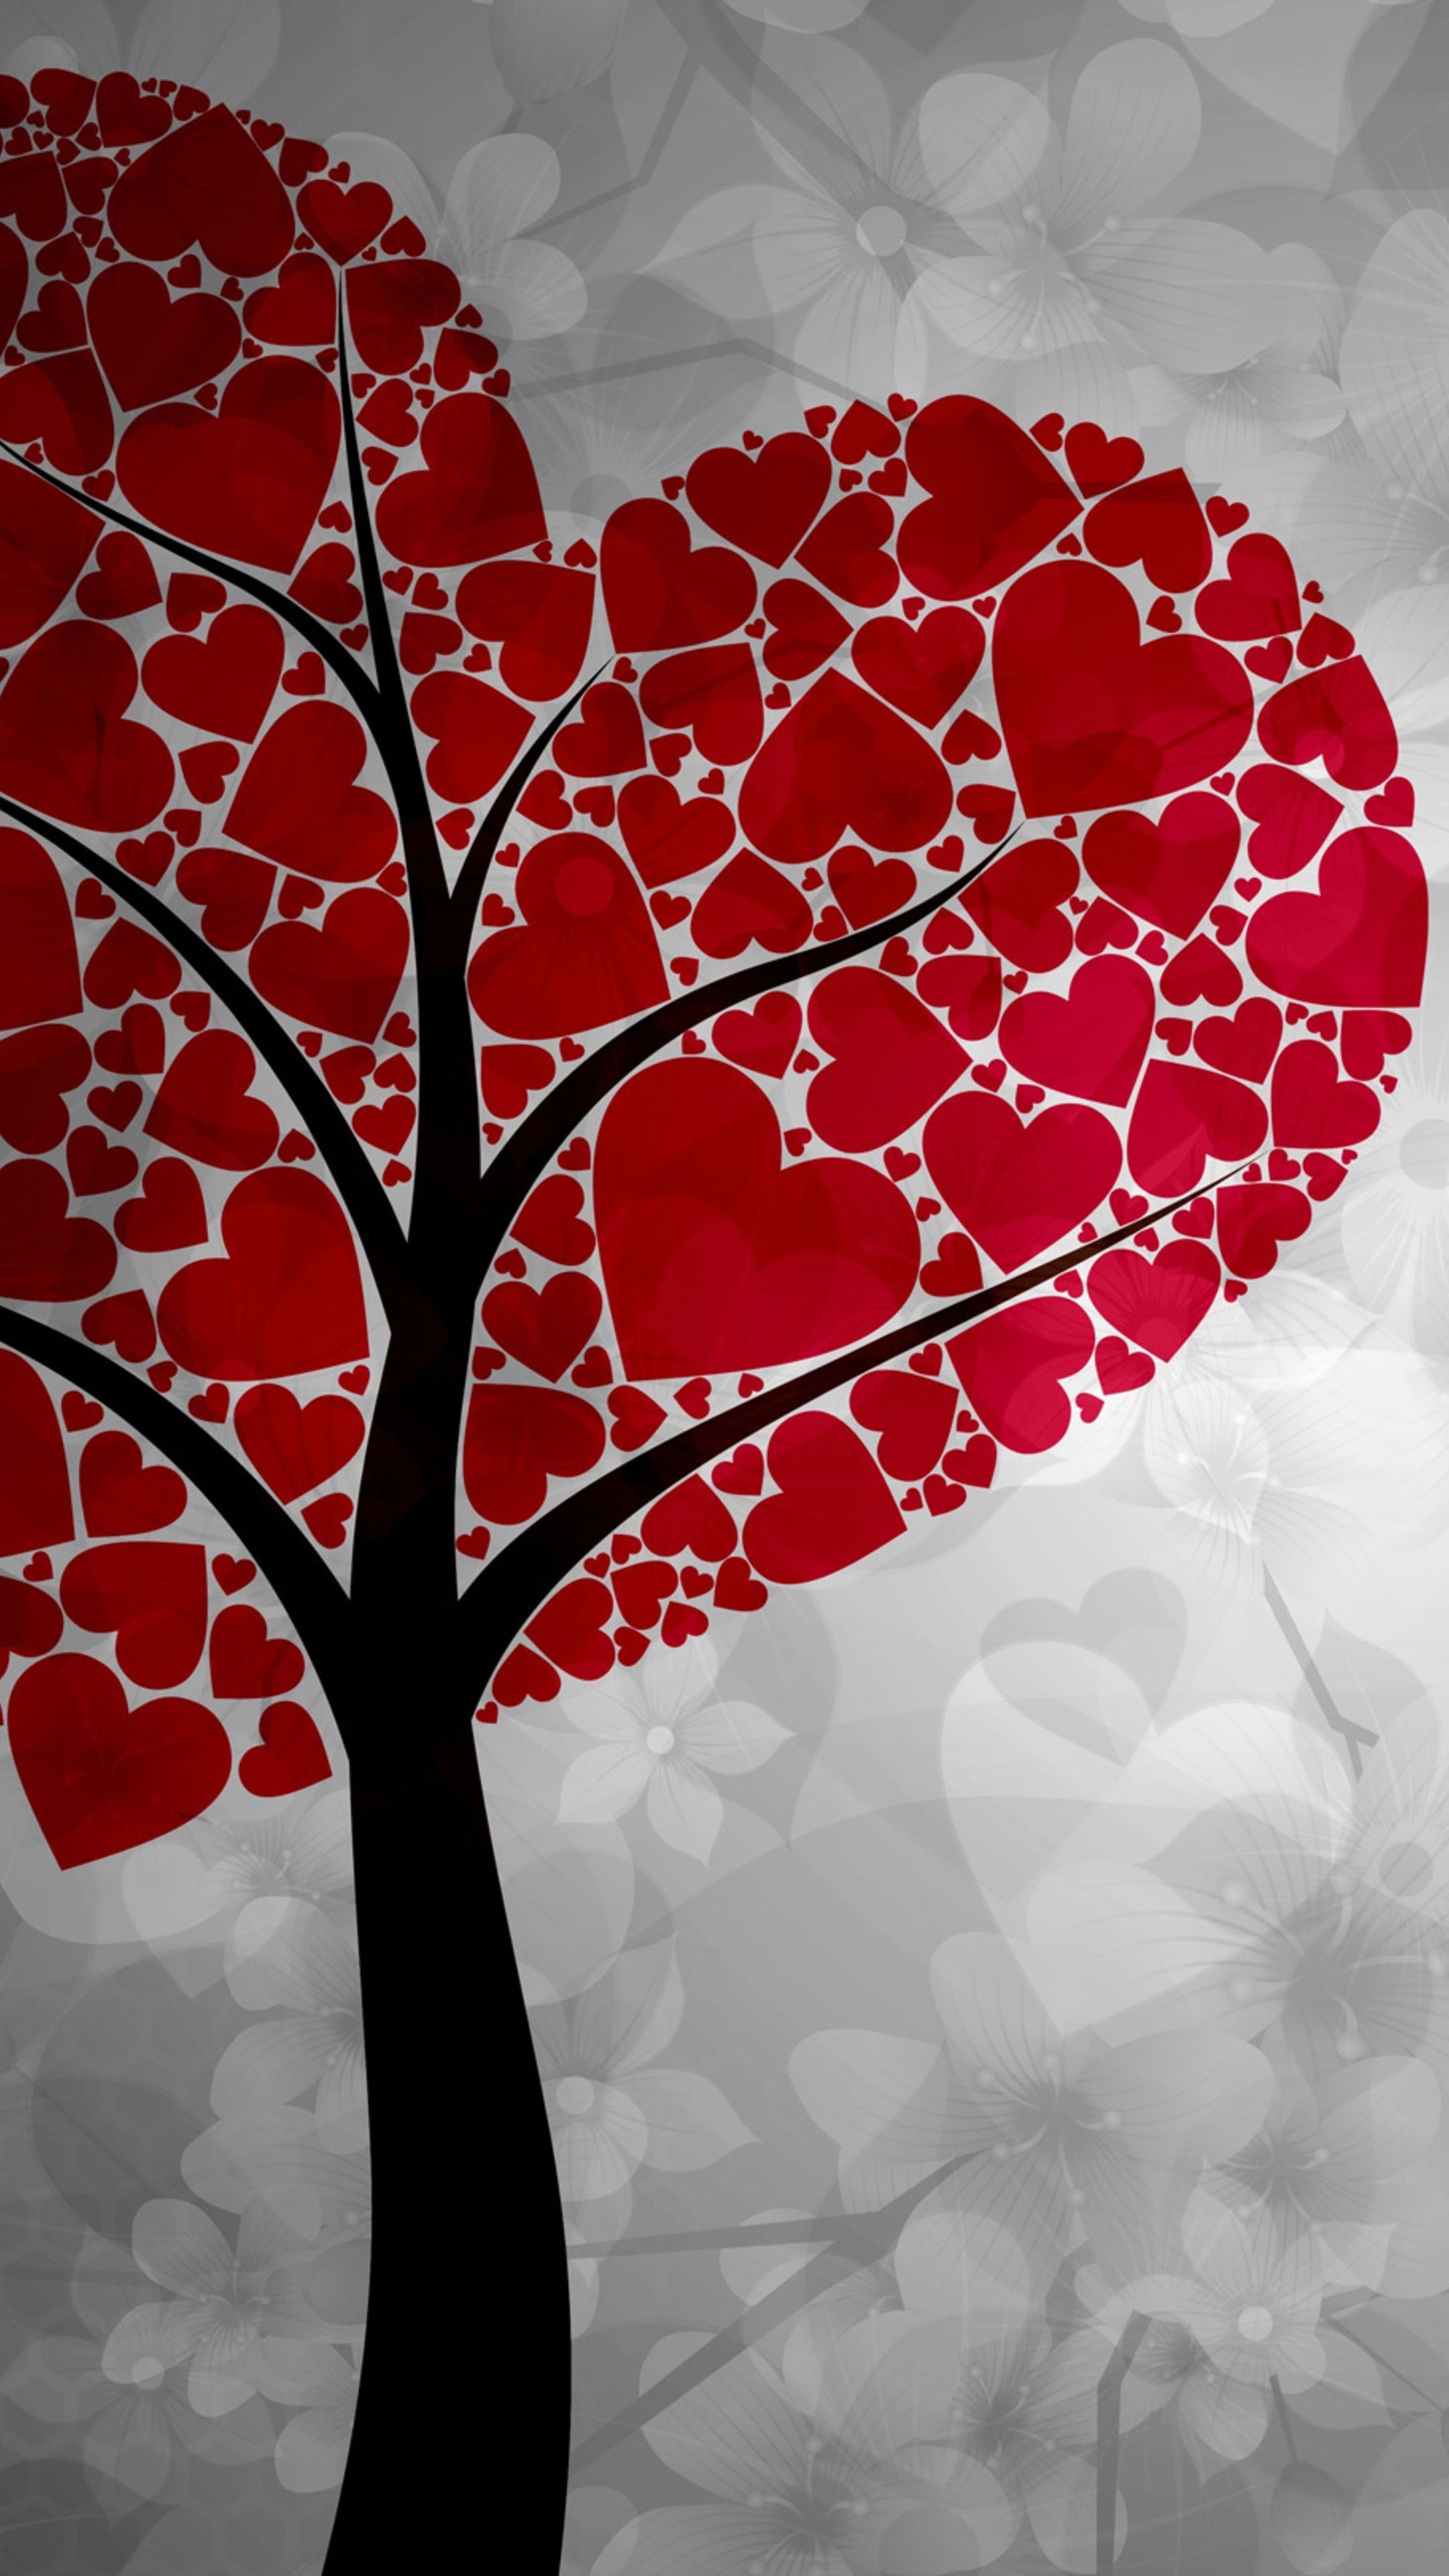 Heart Shape, Artistic wallpapers, Creative designs, Symbol of affection, 2160x3840 4K Handy